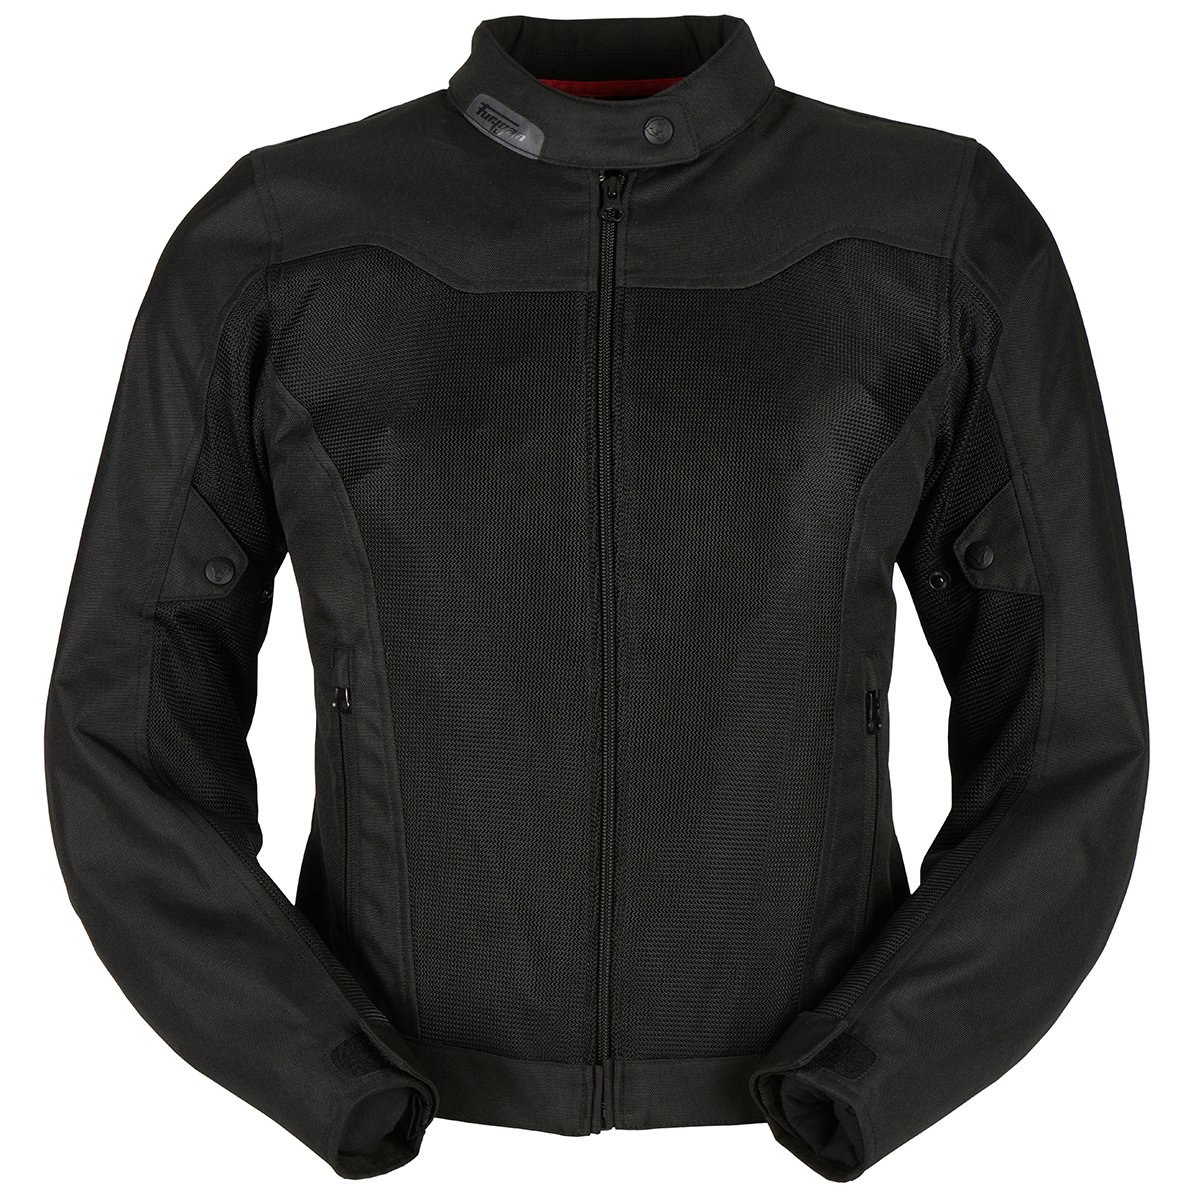 Image of Furygan Mistral Evo 3 Jacket Lady Black Size M ID 3435980342357